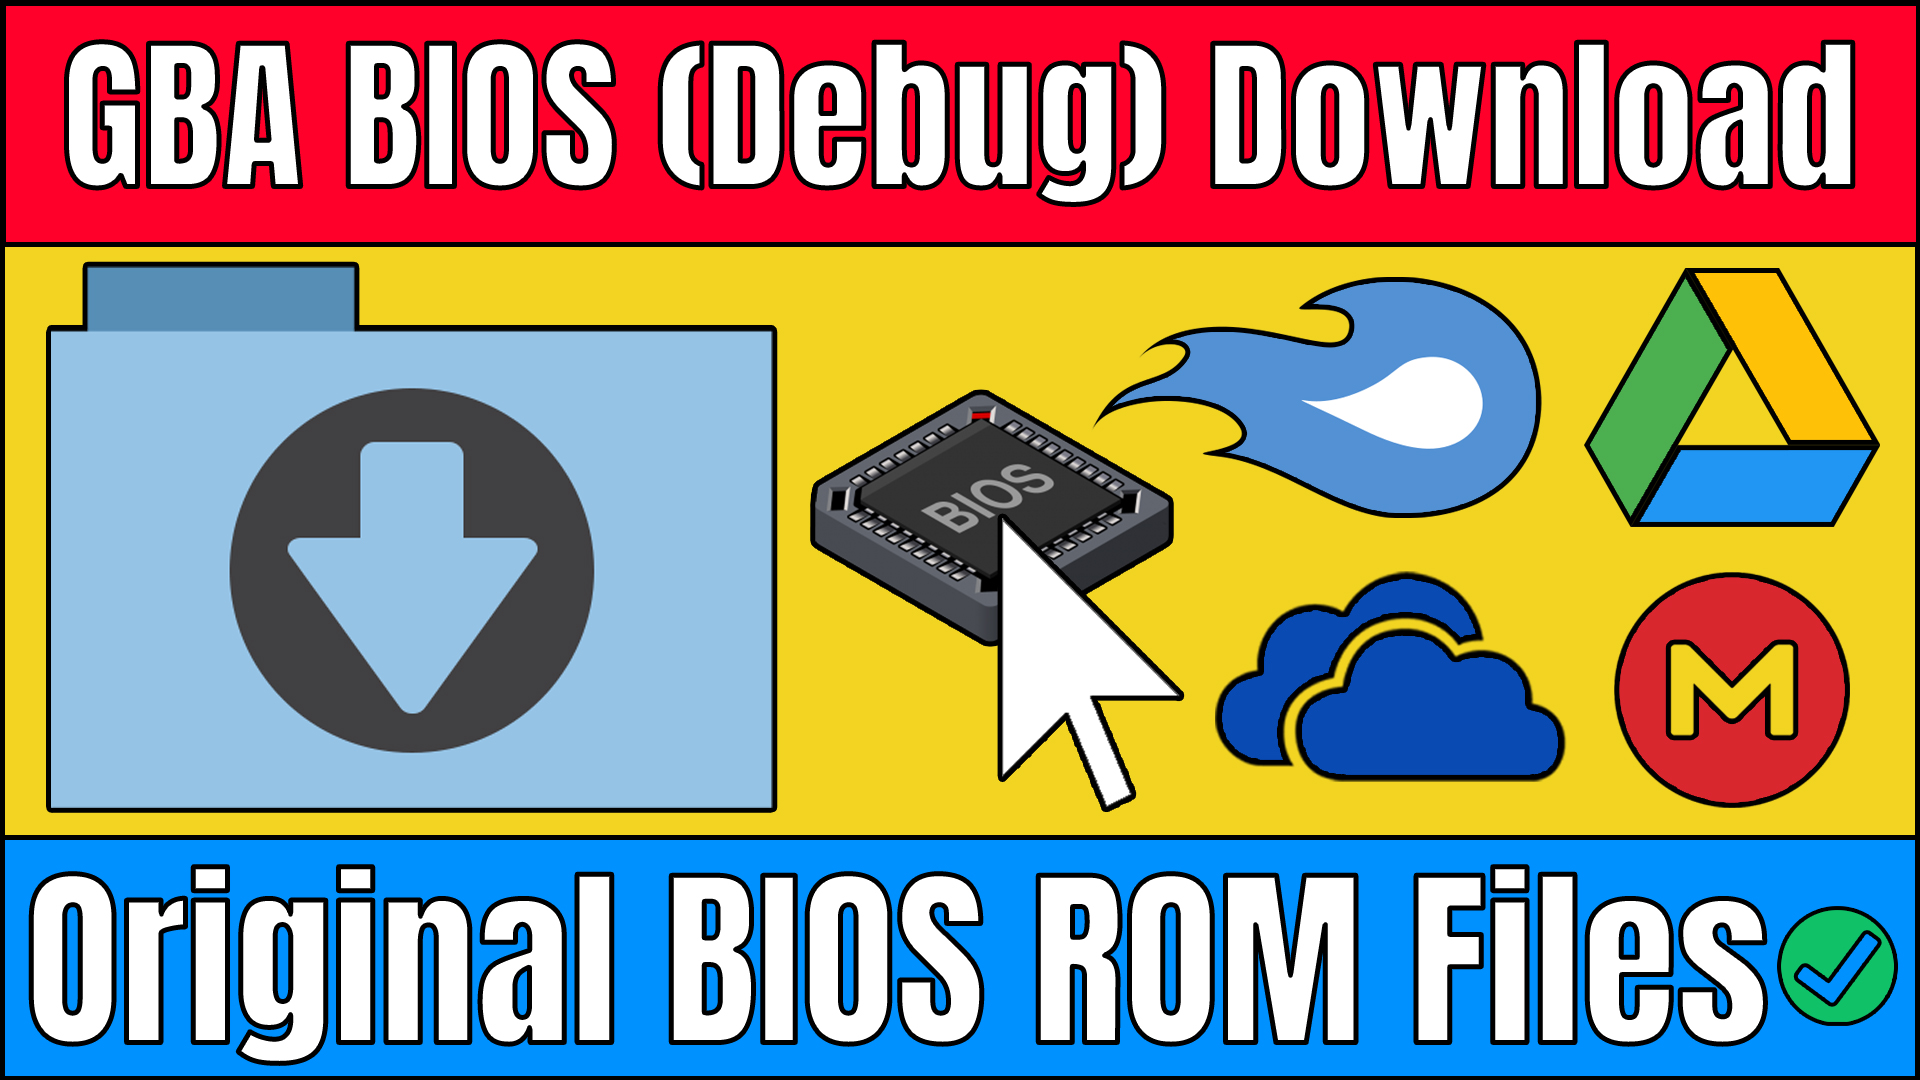 GBA BIOS (Debug) Download